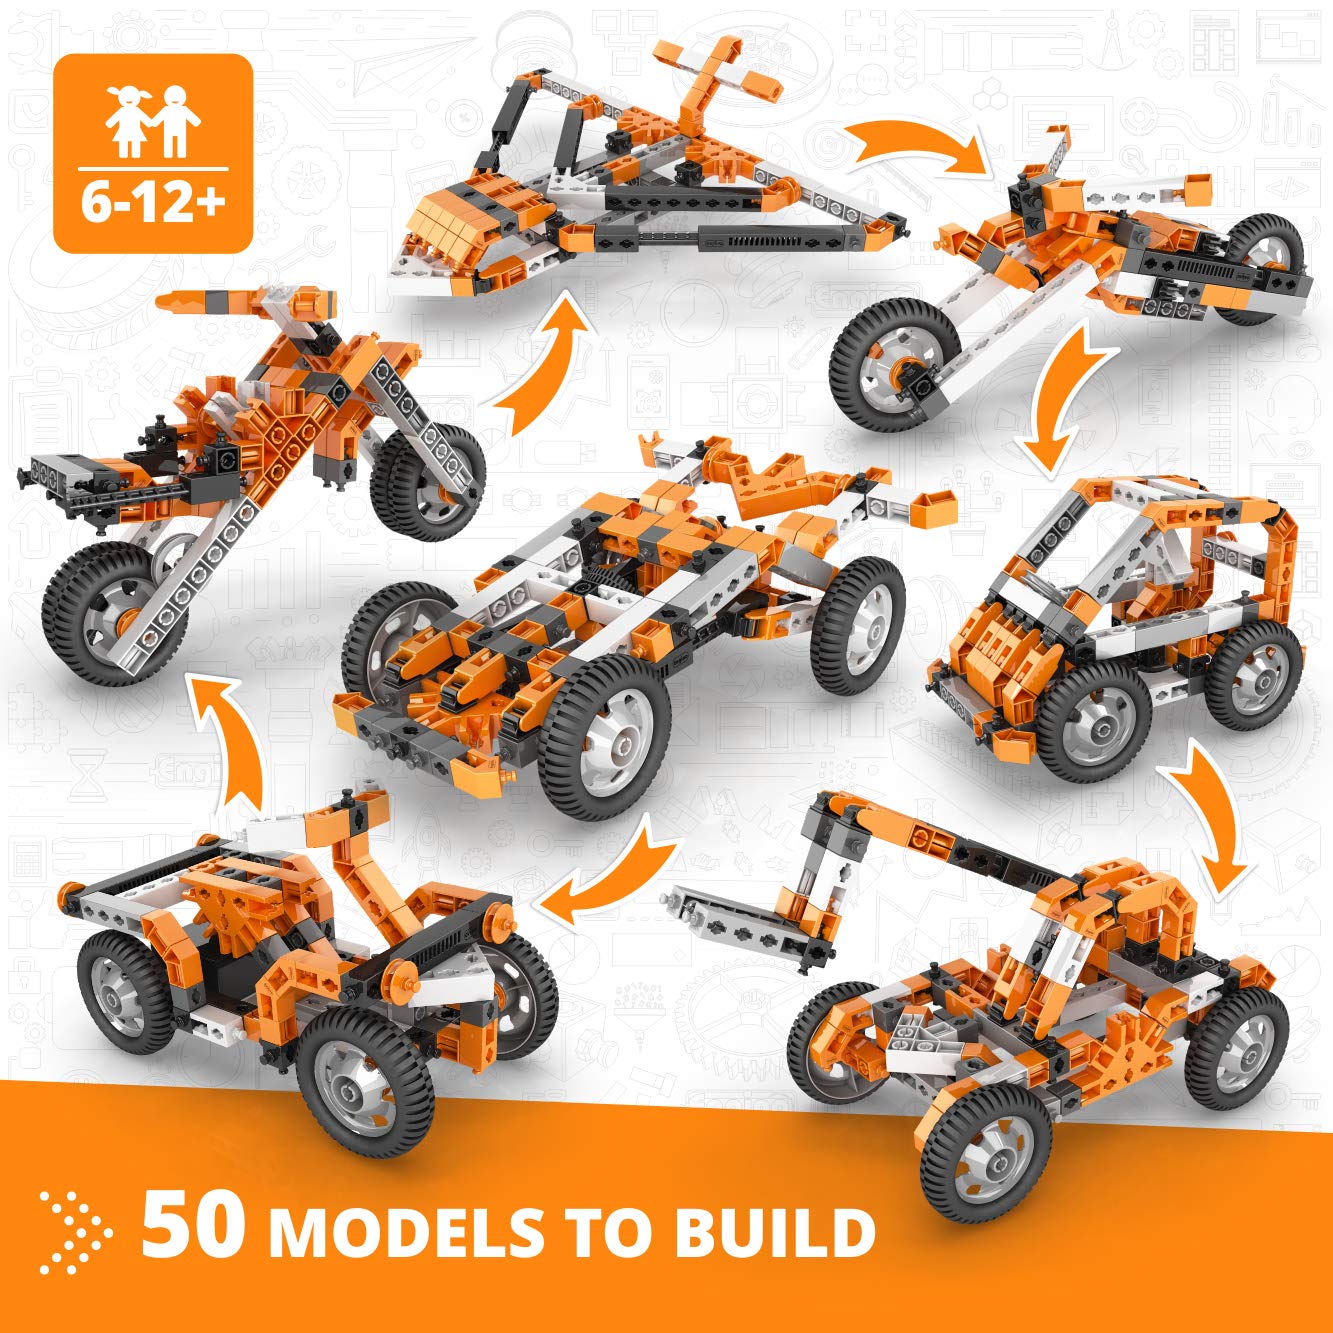 Engino Inventor - Build 50 Motorized Multi-Models Construction Kit